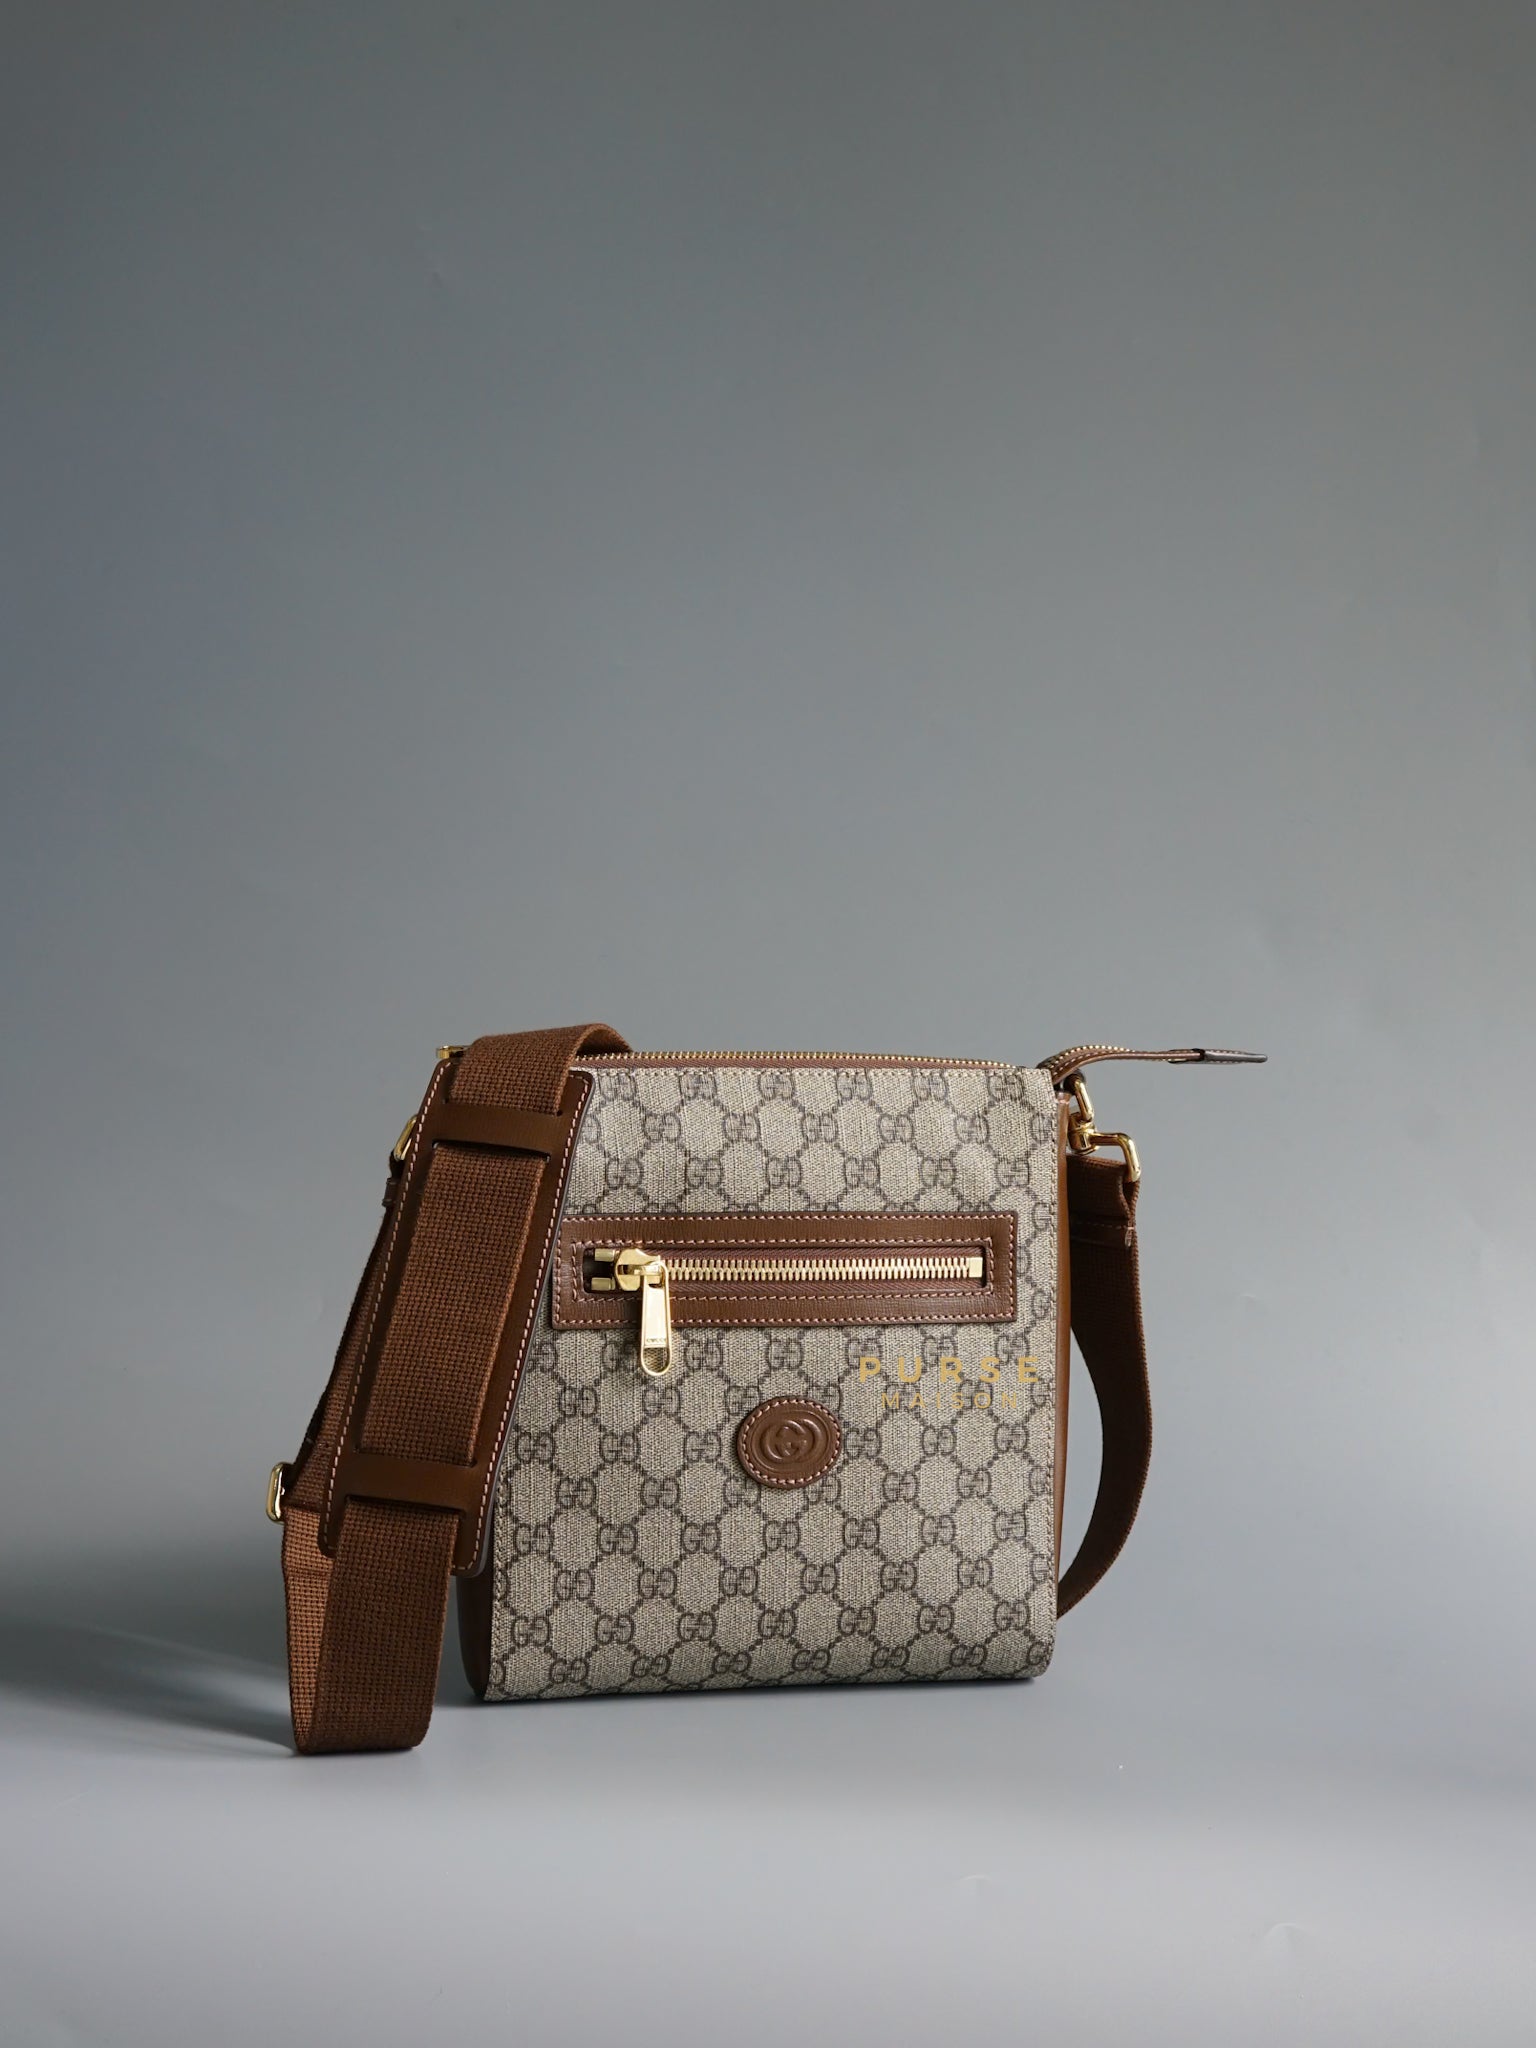 GG Beige Brown Supreme Guccissima Messenger Bag | Purse Maison Luxury Bags Shop